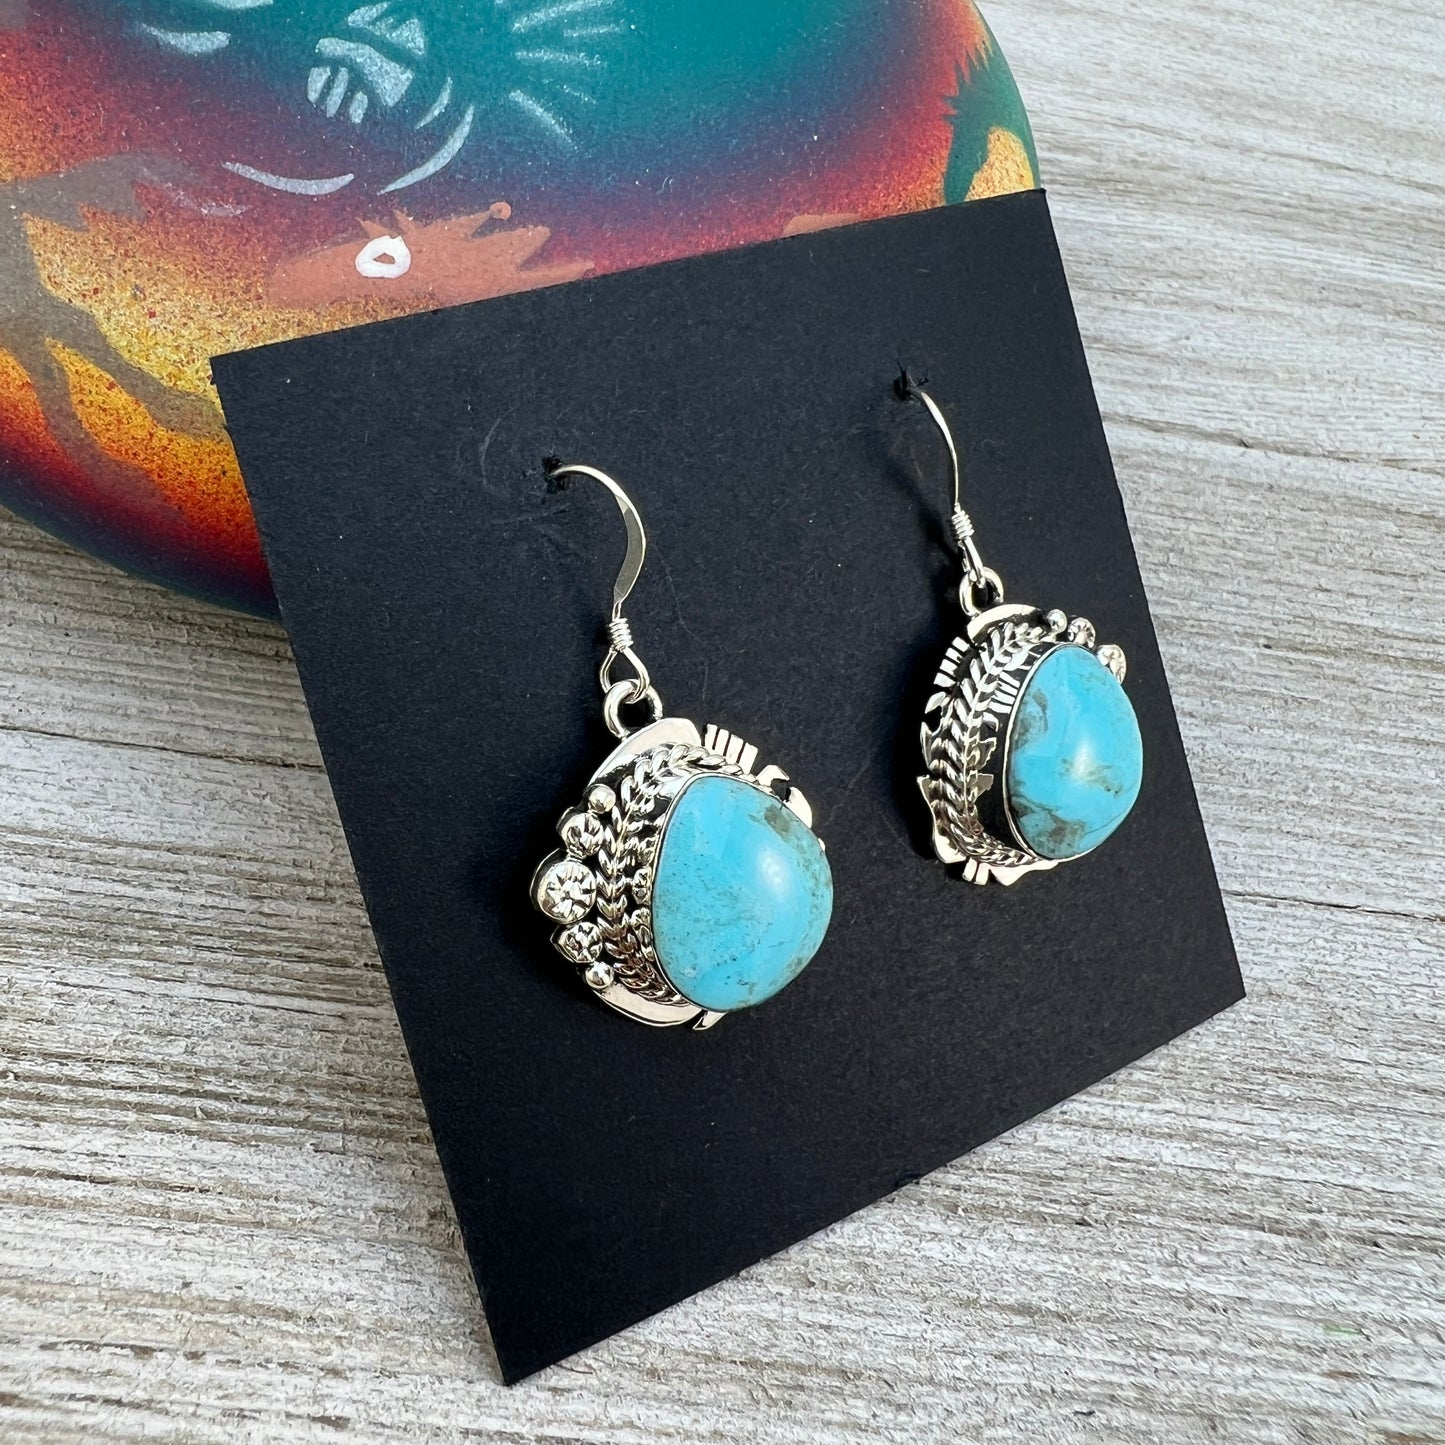 Turquoise dangle earrings #4, sterling silver, Kingman Turquoise, Navajo handmade by Arlene Lewis, signed